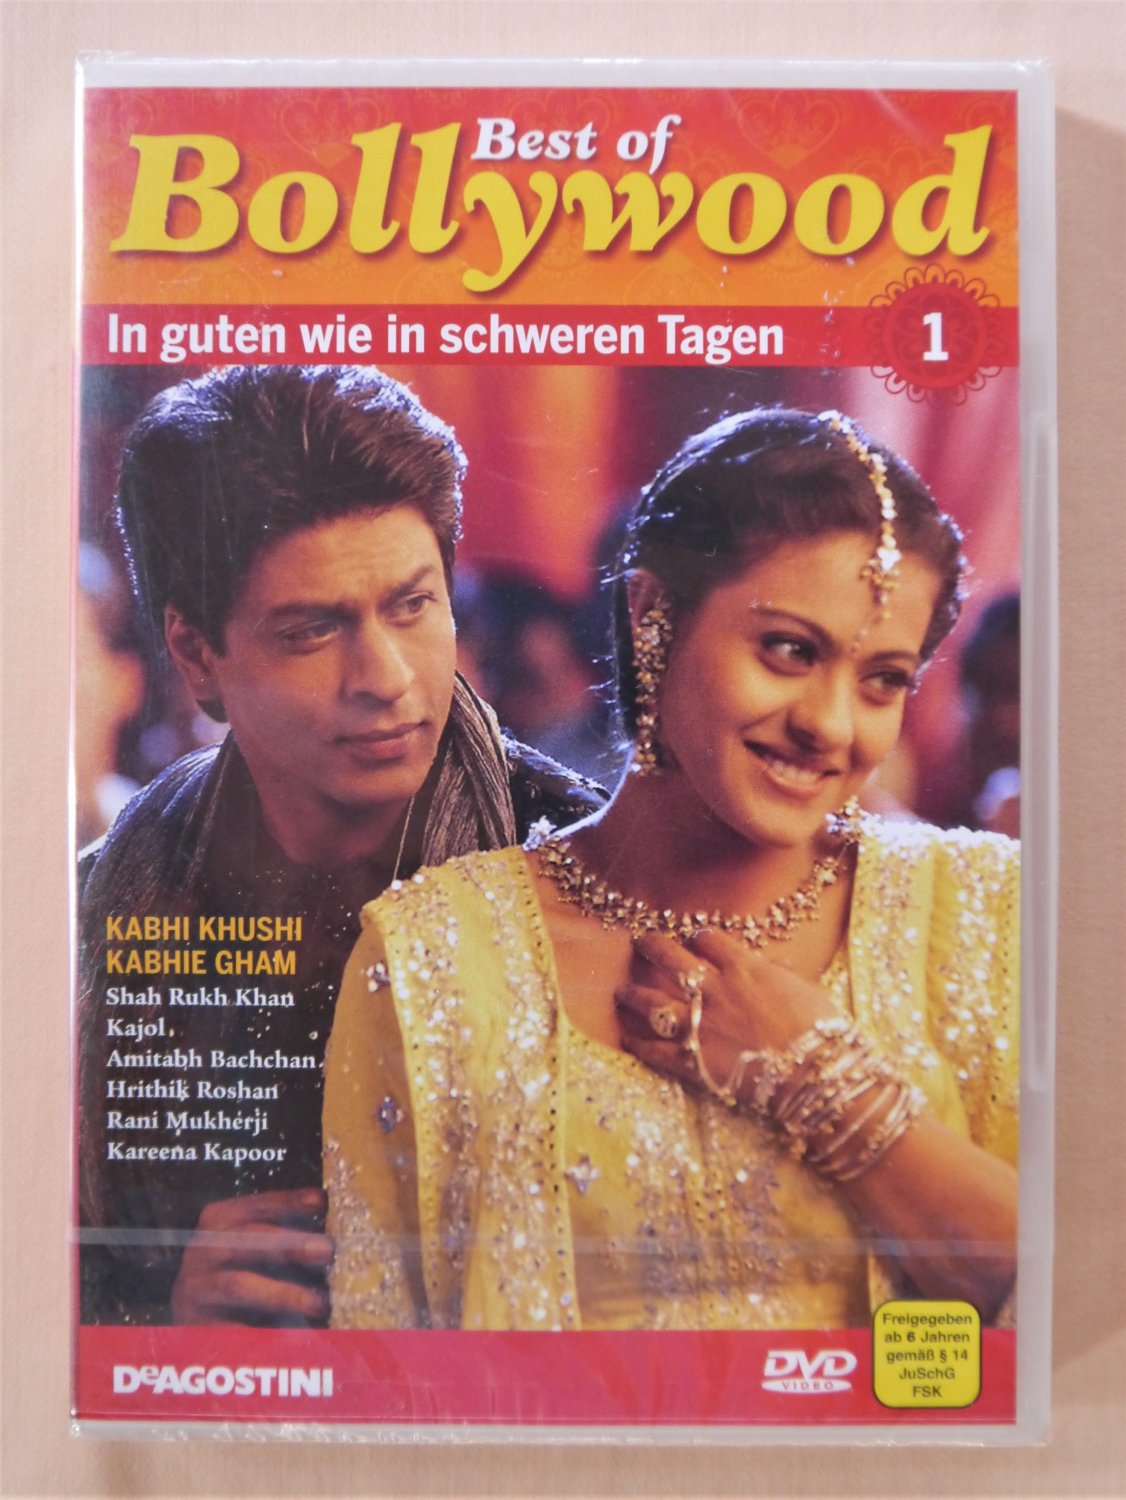 In guten wie in schweren Tagen - Best of Bollywood“ – Filme